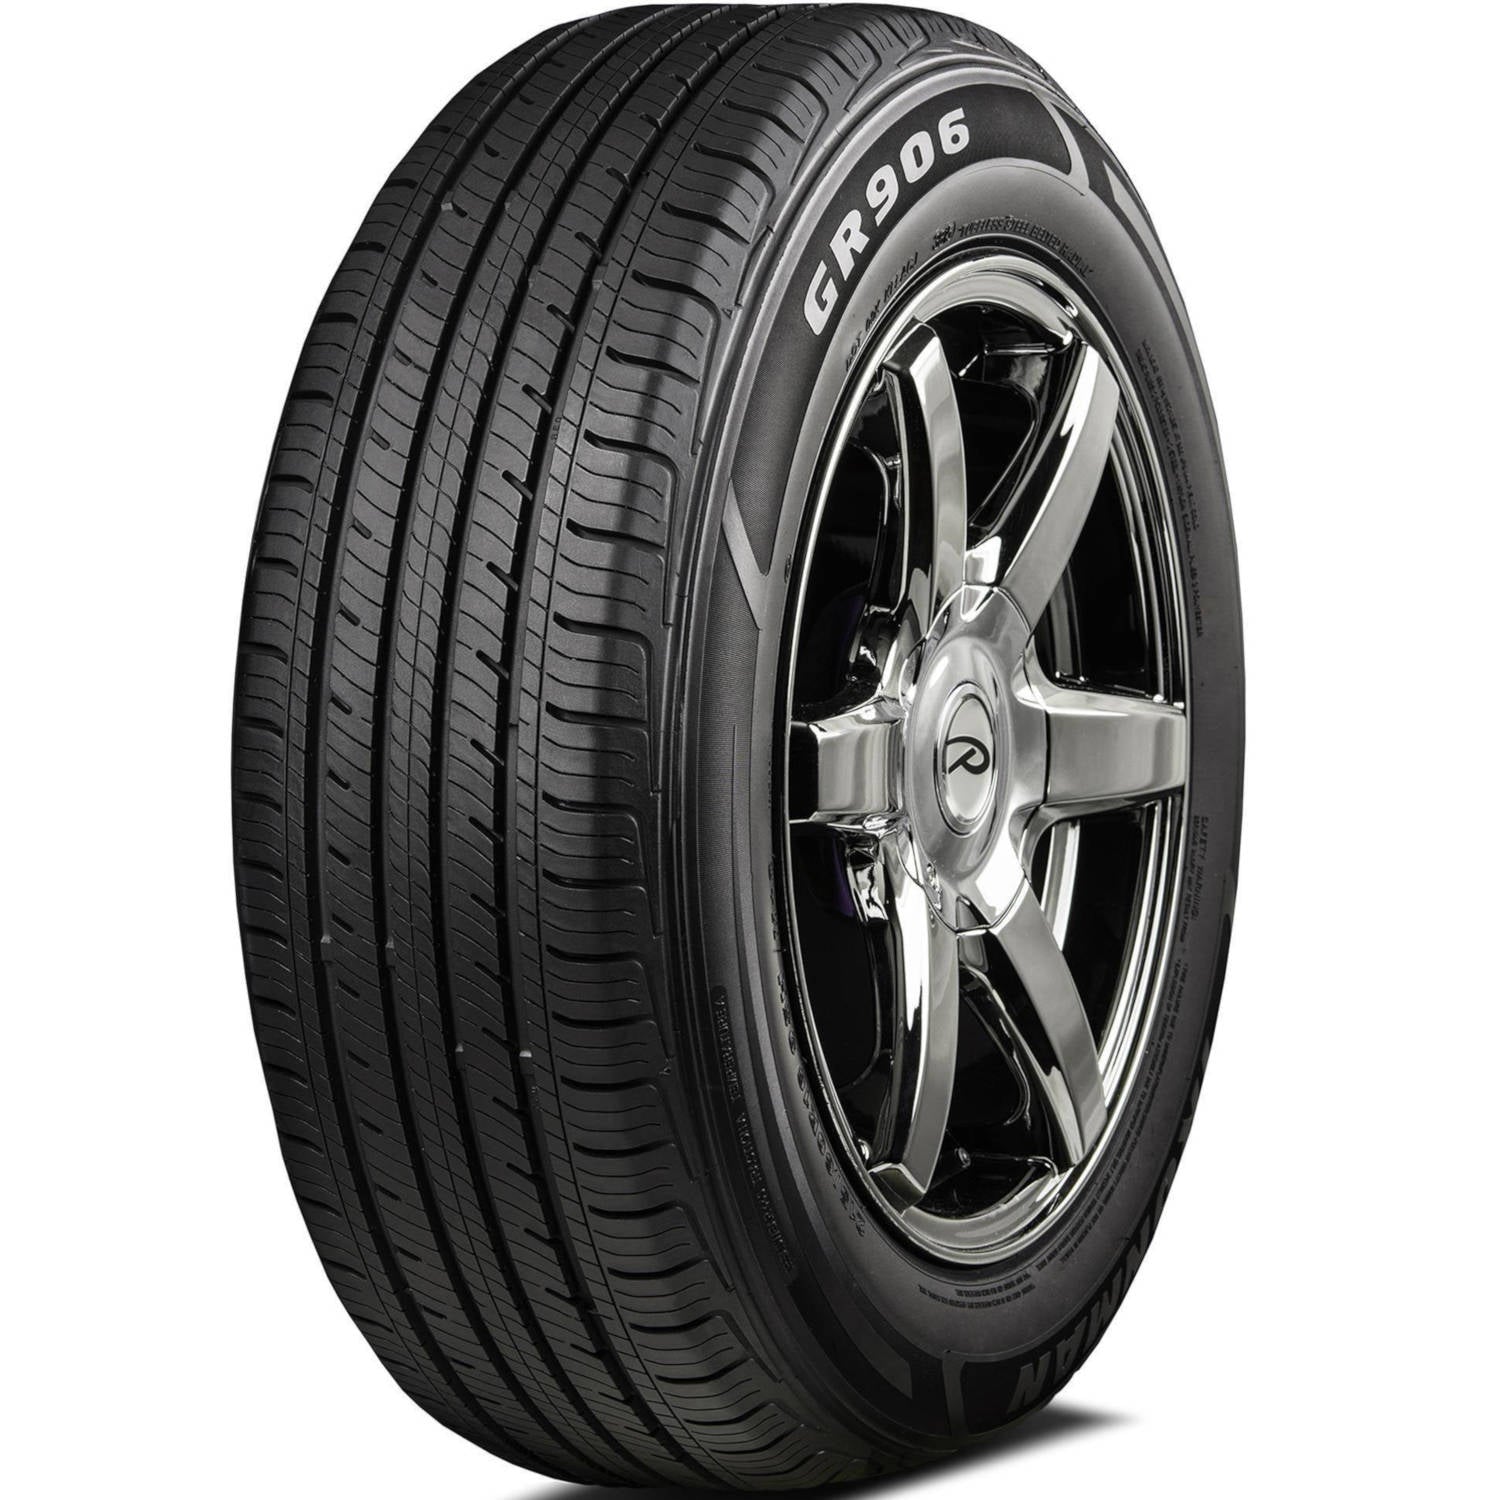 IRONMAN GR906 205/50R16 (24.1X8.1R 16) Tires